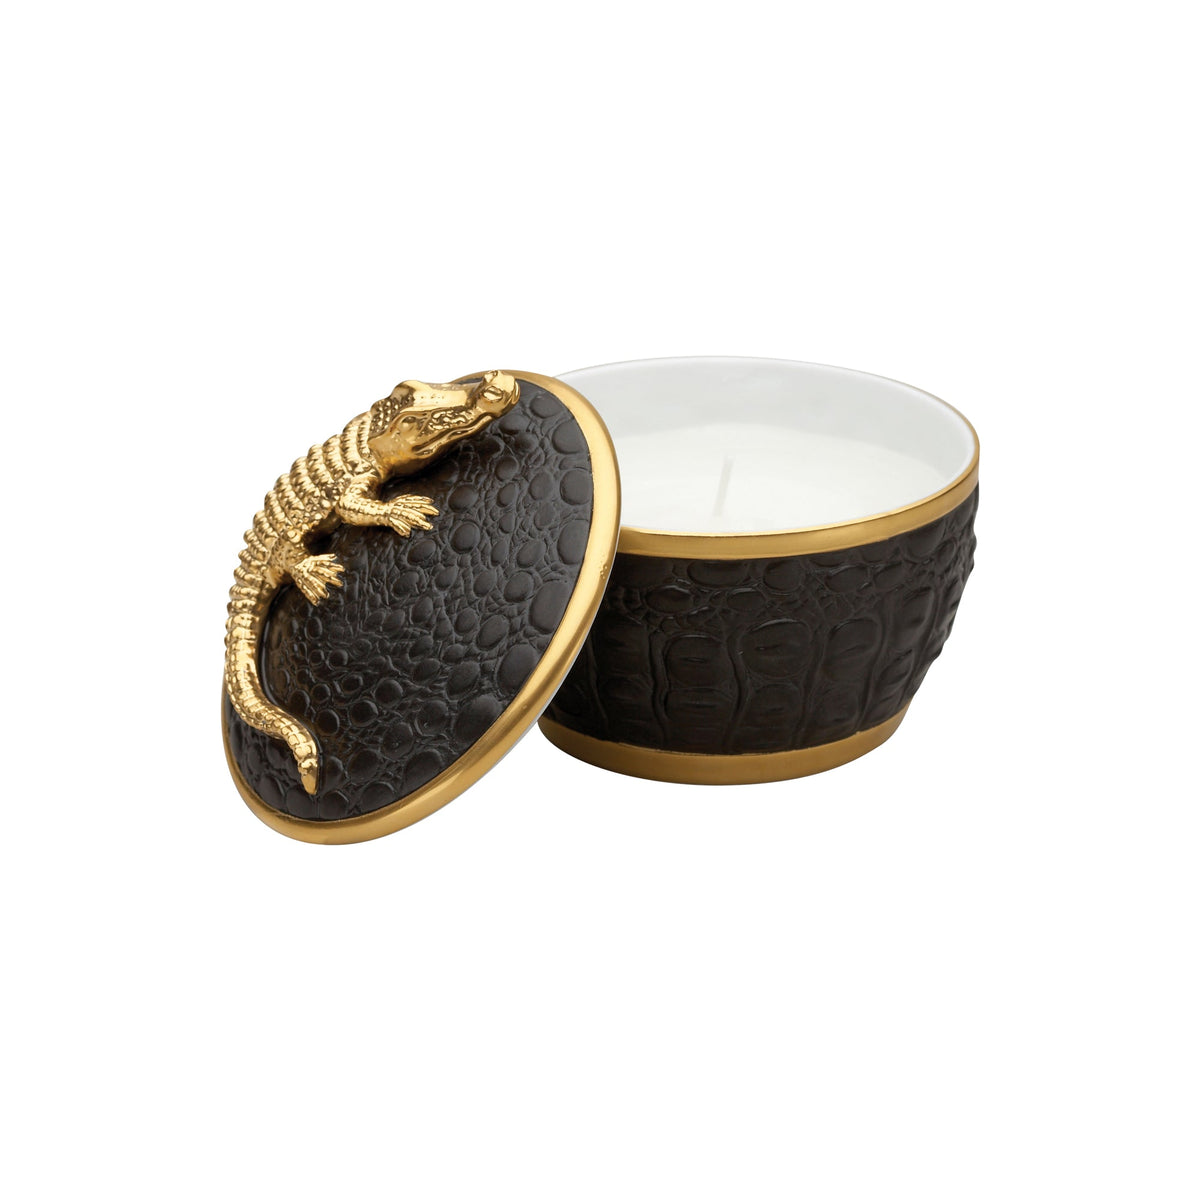 Gold Crocodile Candle on Black Porcelain Base